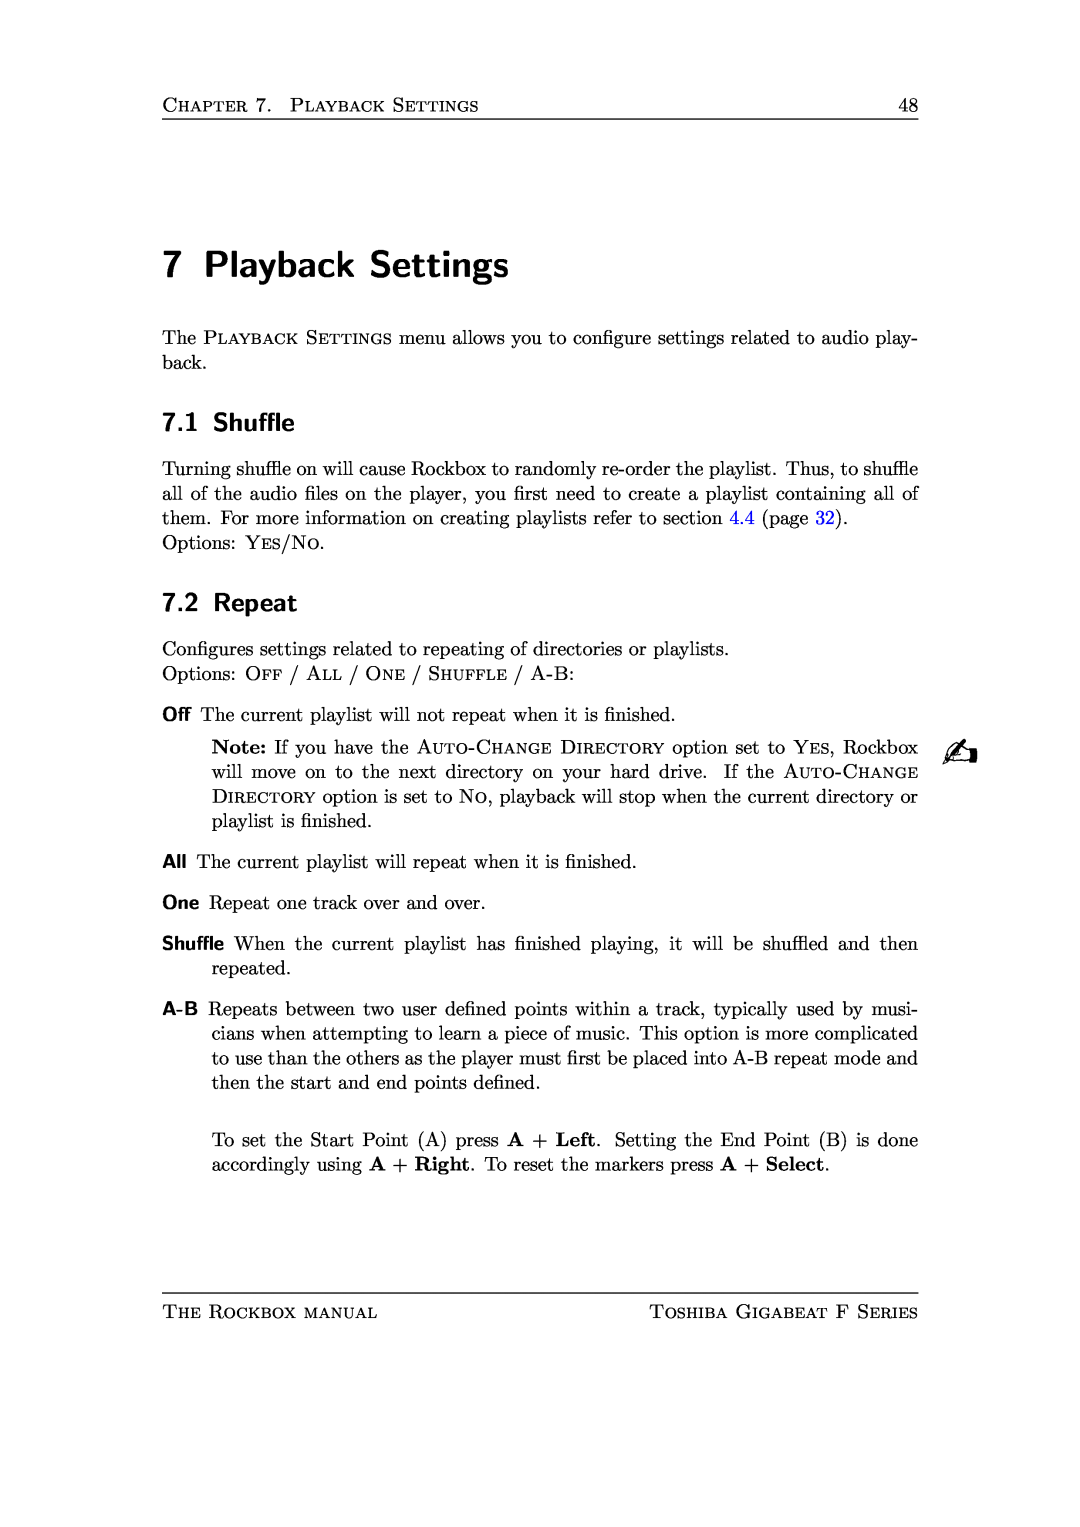 Toshiba F Series manual Playback Settings, 7.1 Shue, Repeat 